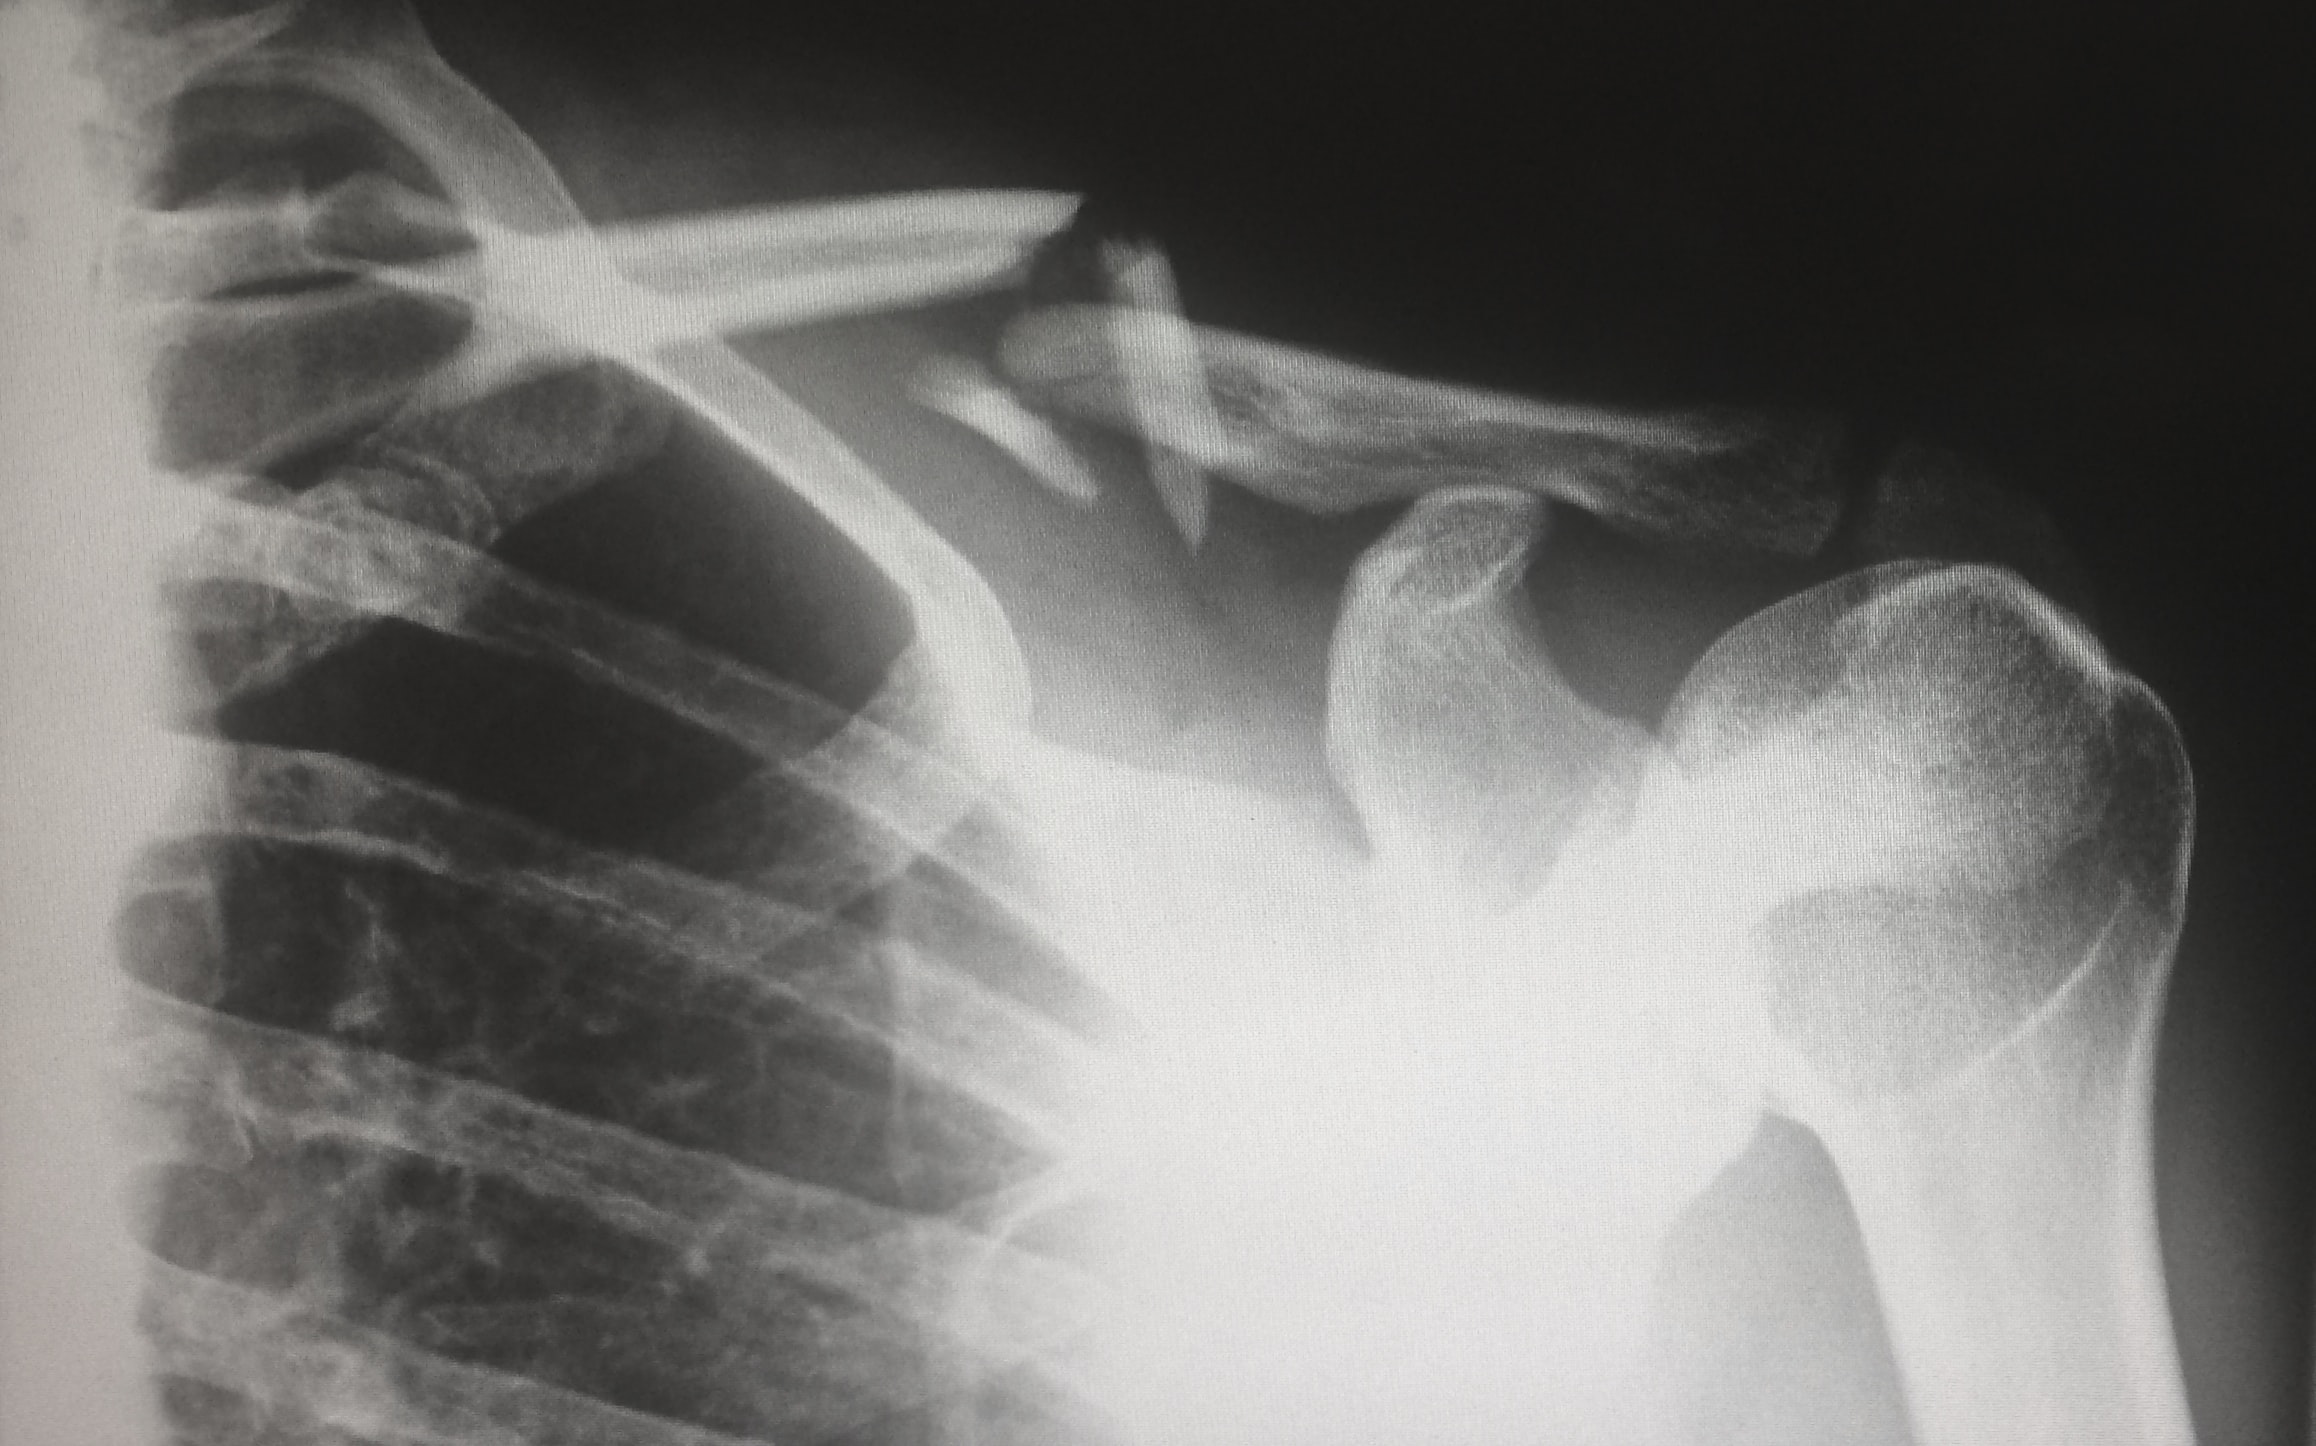 black and white x-ray of broken bones